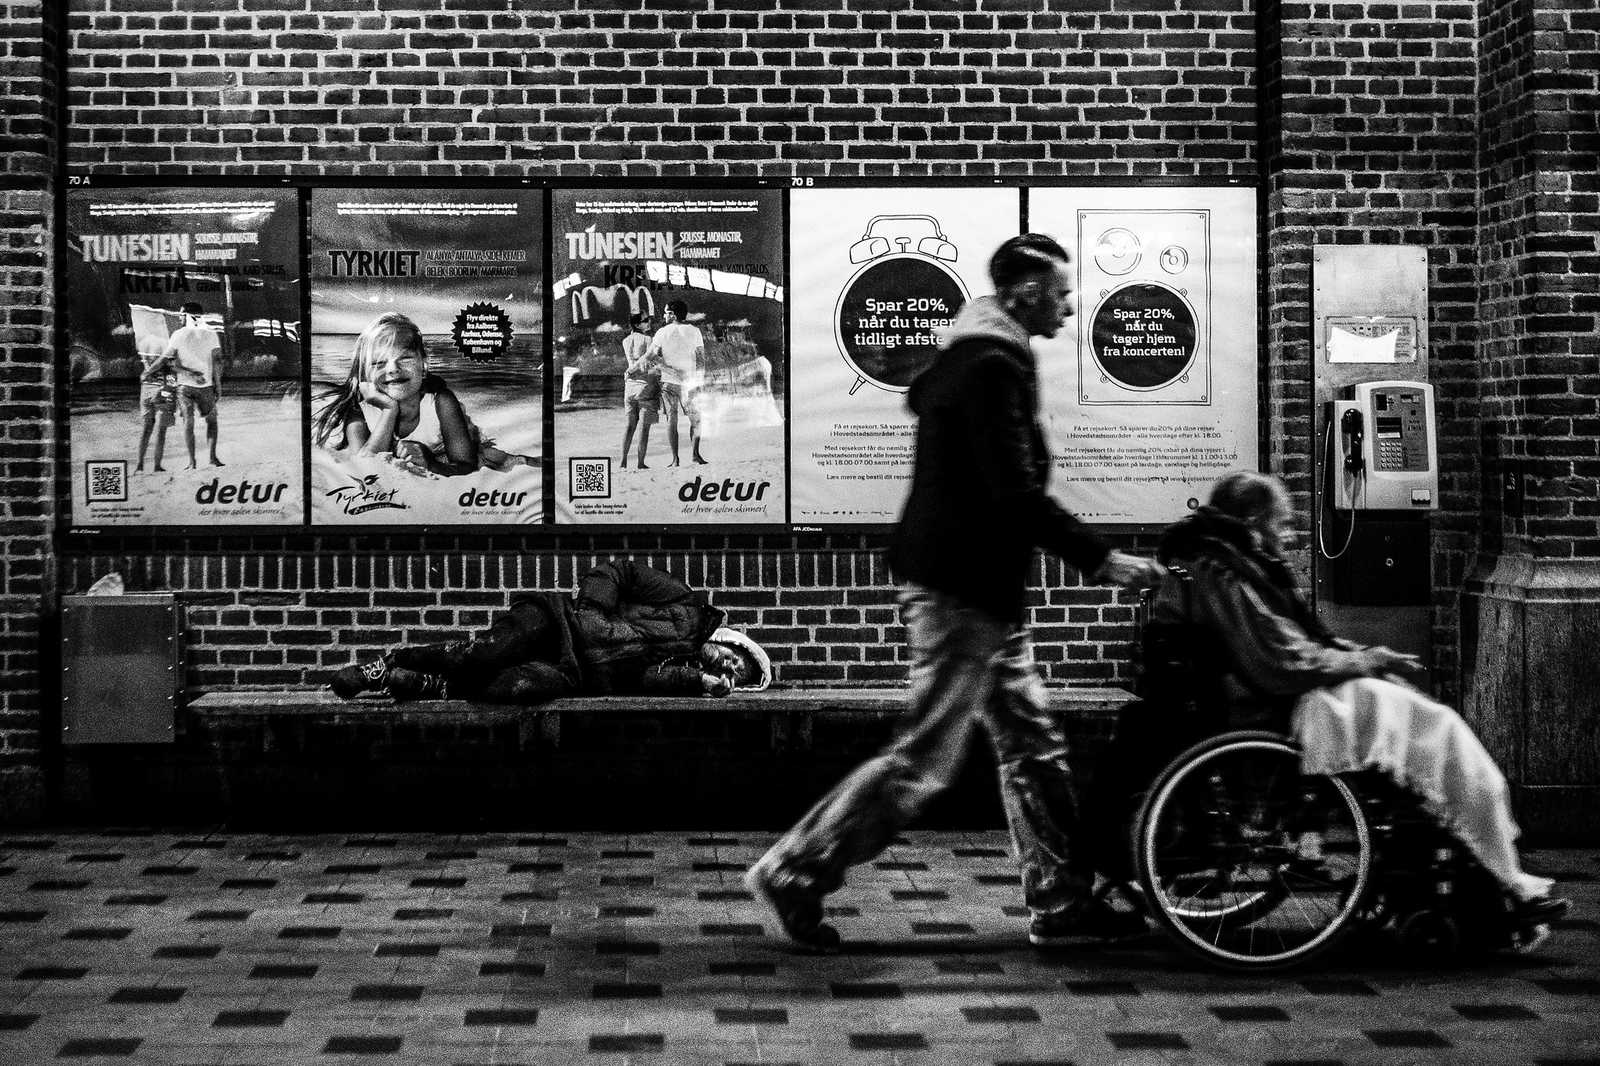 Copenhagen: Zone ban against homeless people